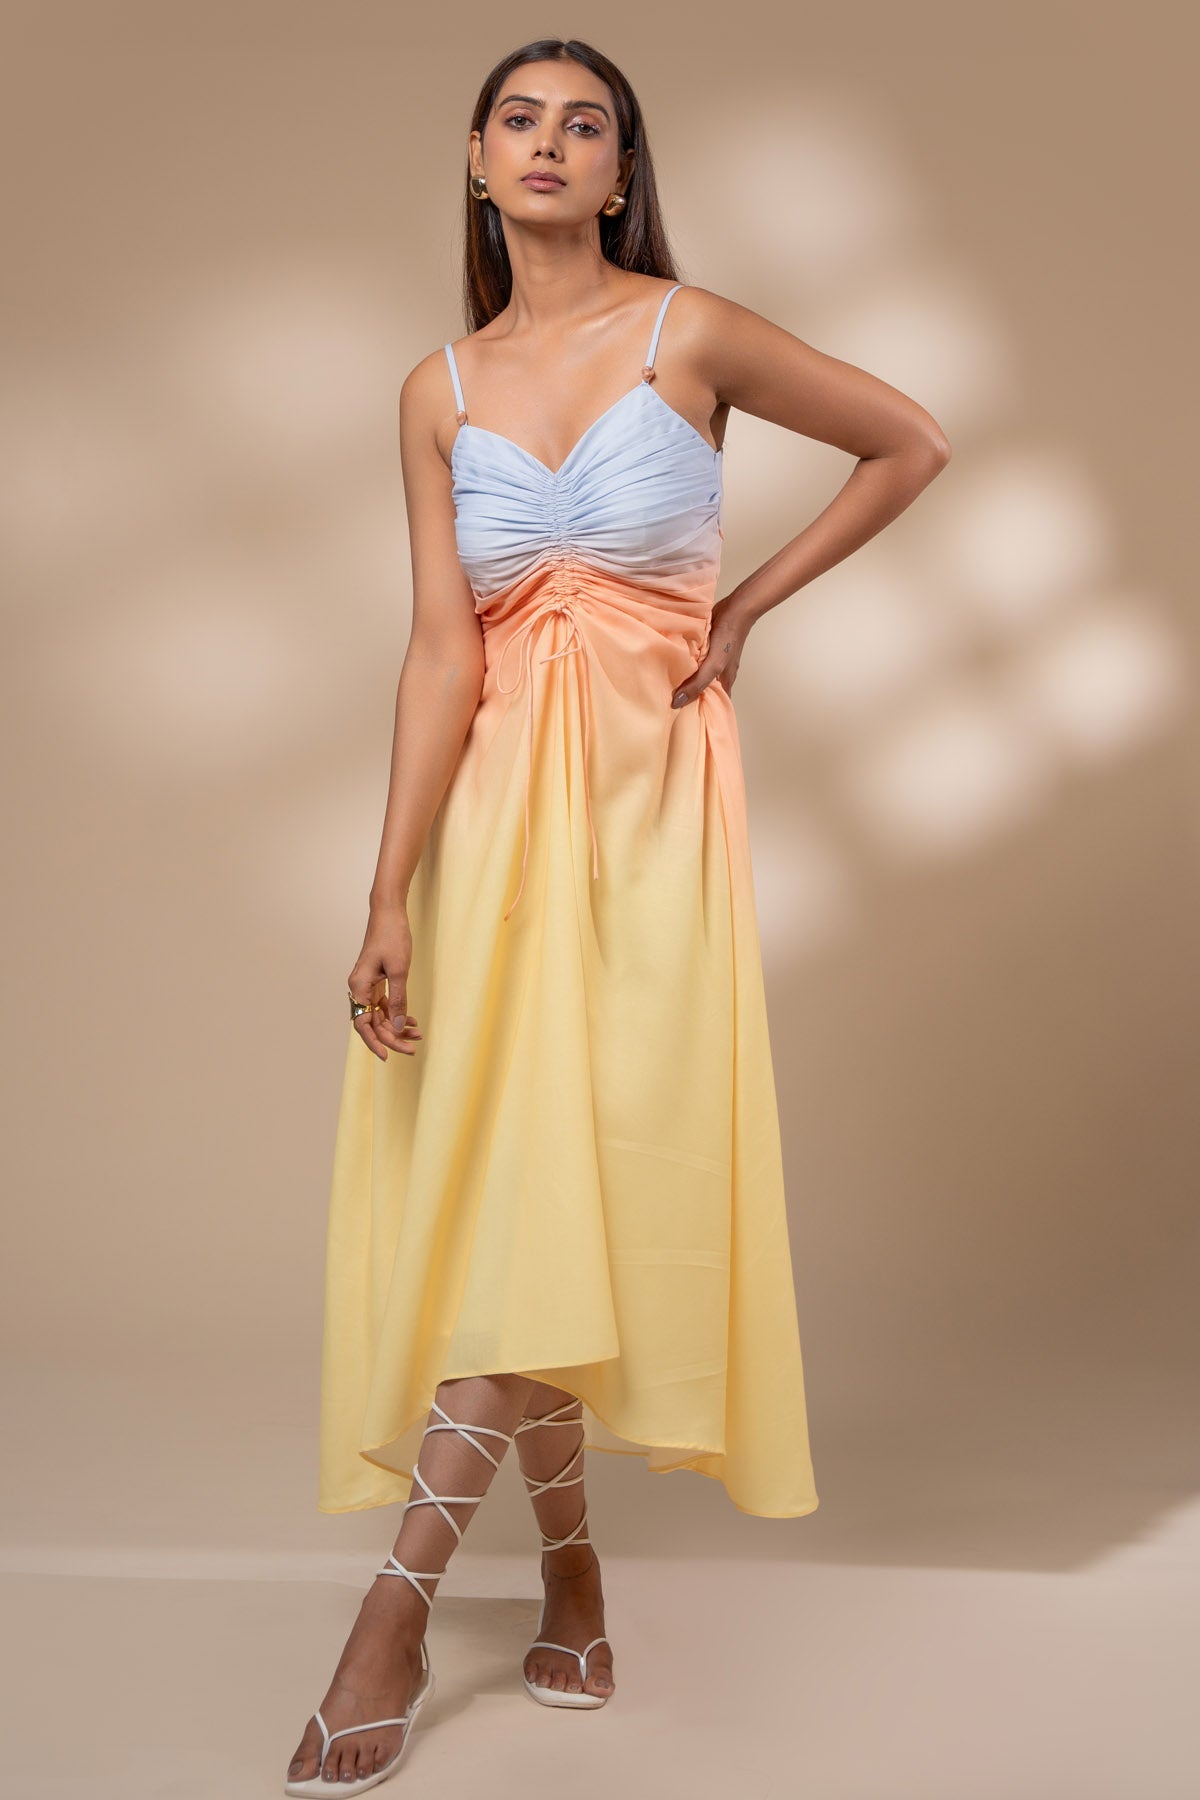 The Decem Ally Multicolor Linen V Neck Dress for Women online available at scrollnshops